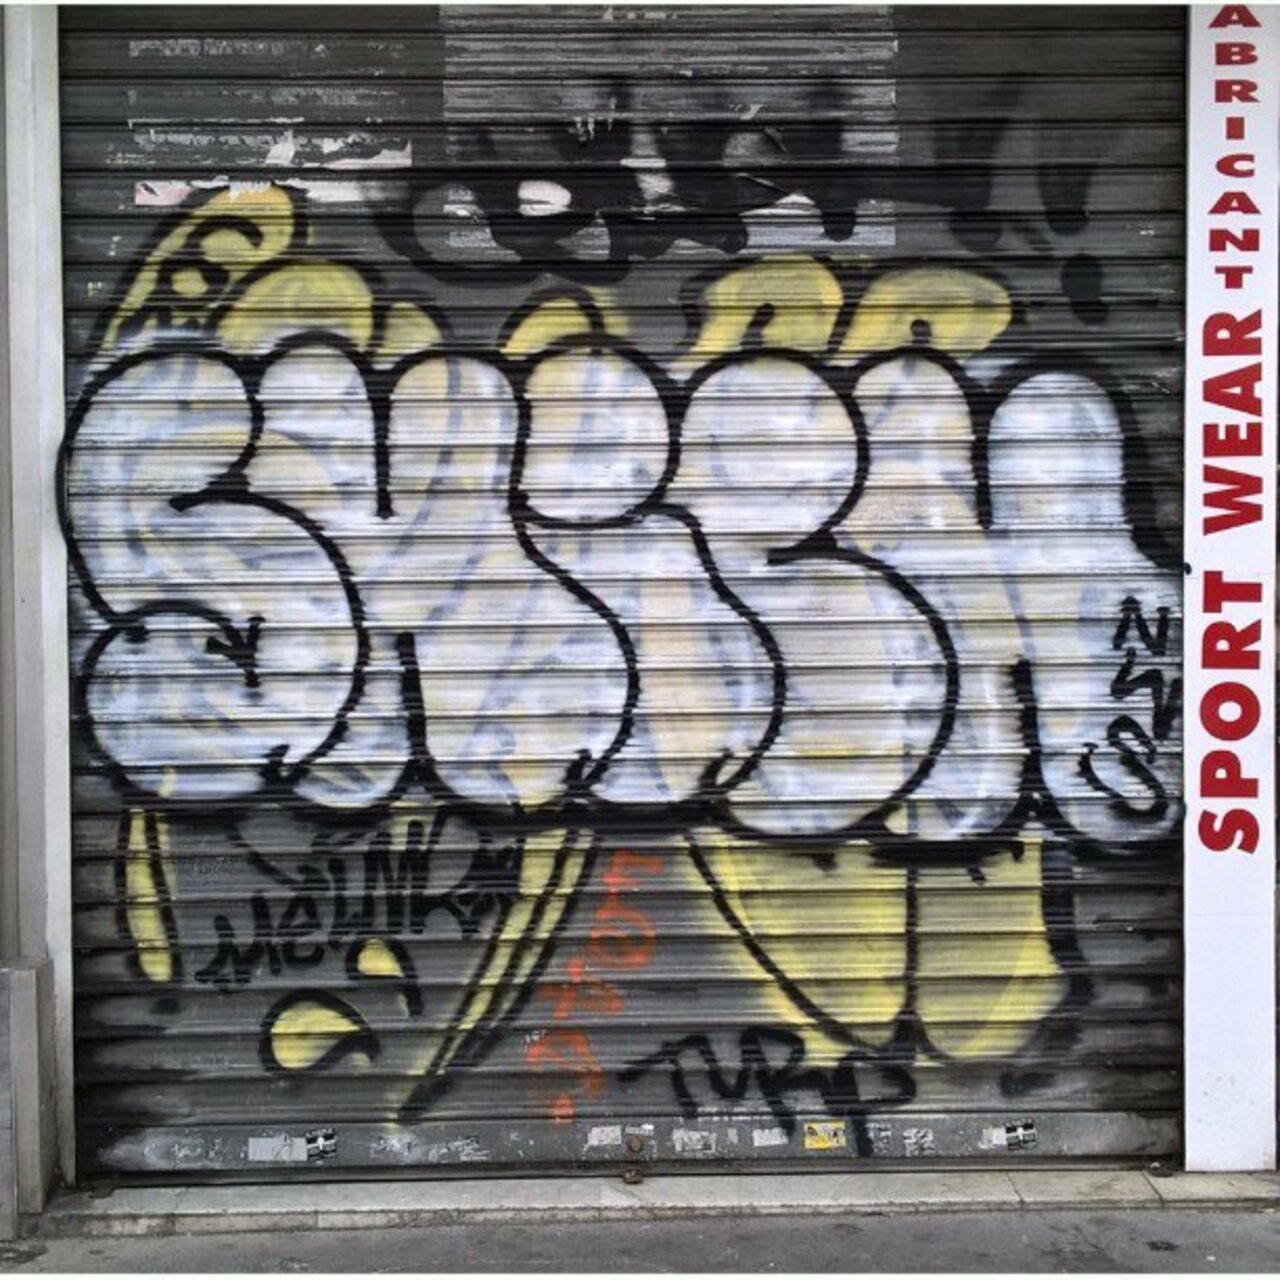 SHICH CELPH
#streetart #graffiti #graff #art #fatcap #bombing #sprayart #spraycanart #wallart #handstyle #lettering… https://t.co/FuM4ukT98b